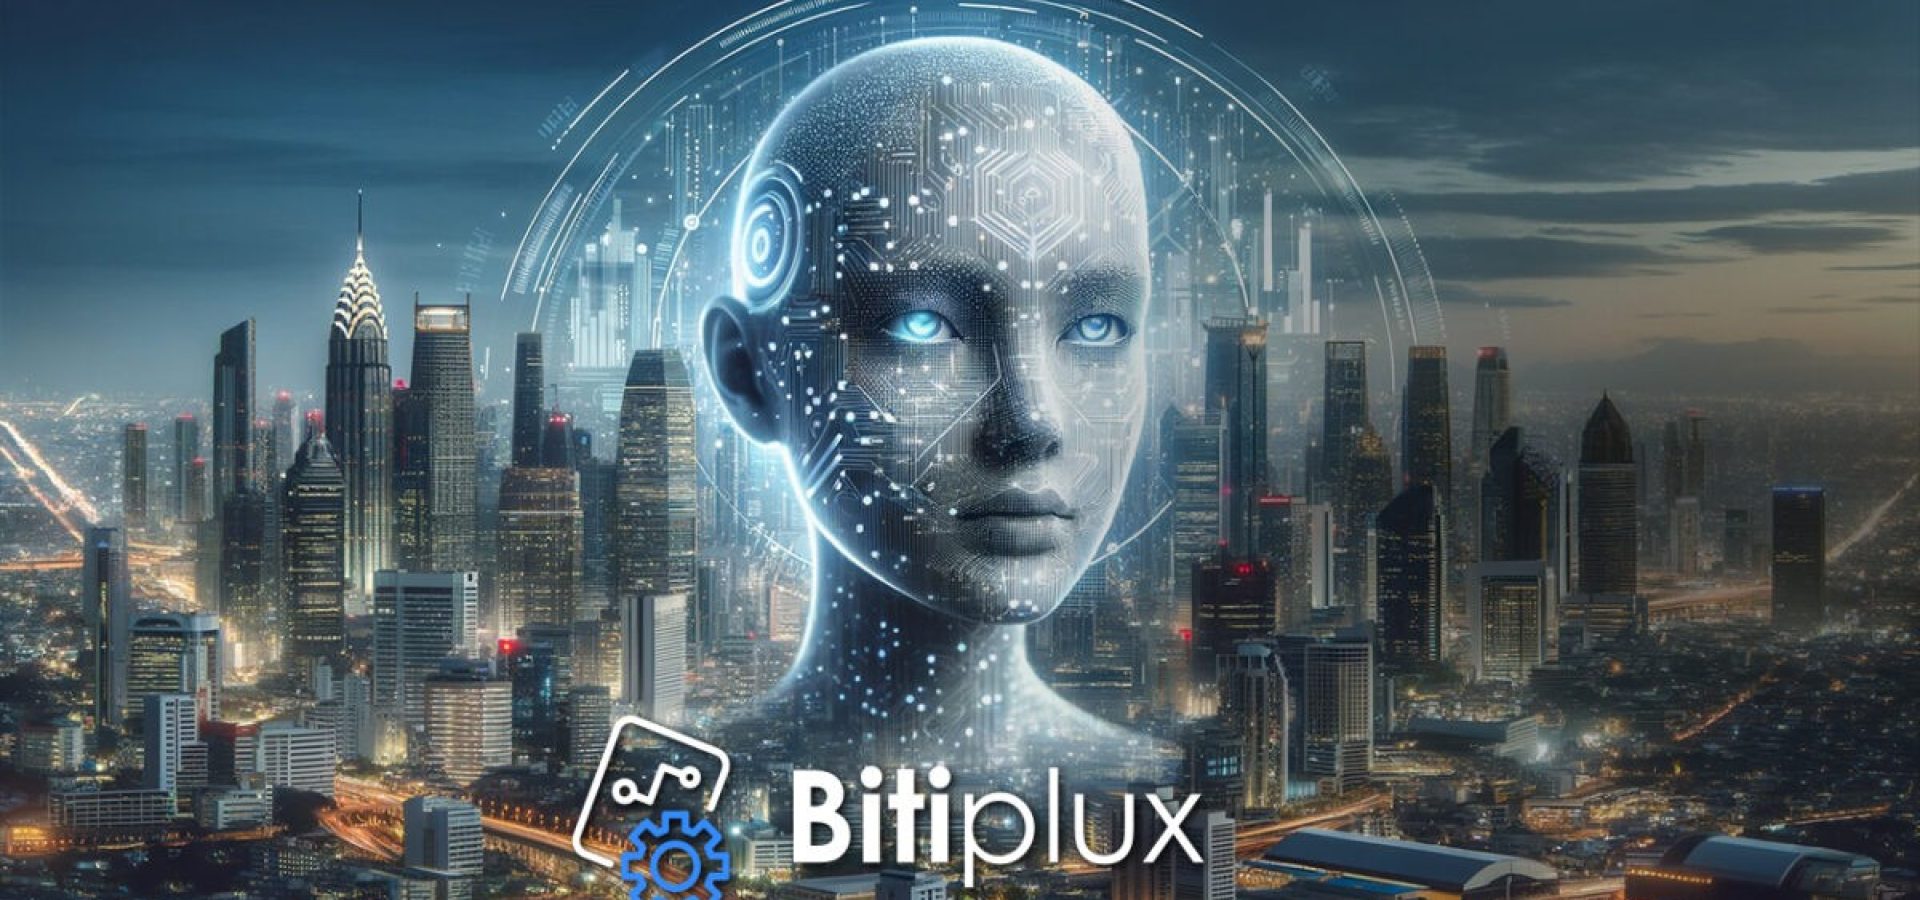 Bitiplux Crypto Trading App